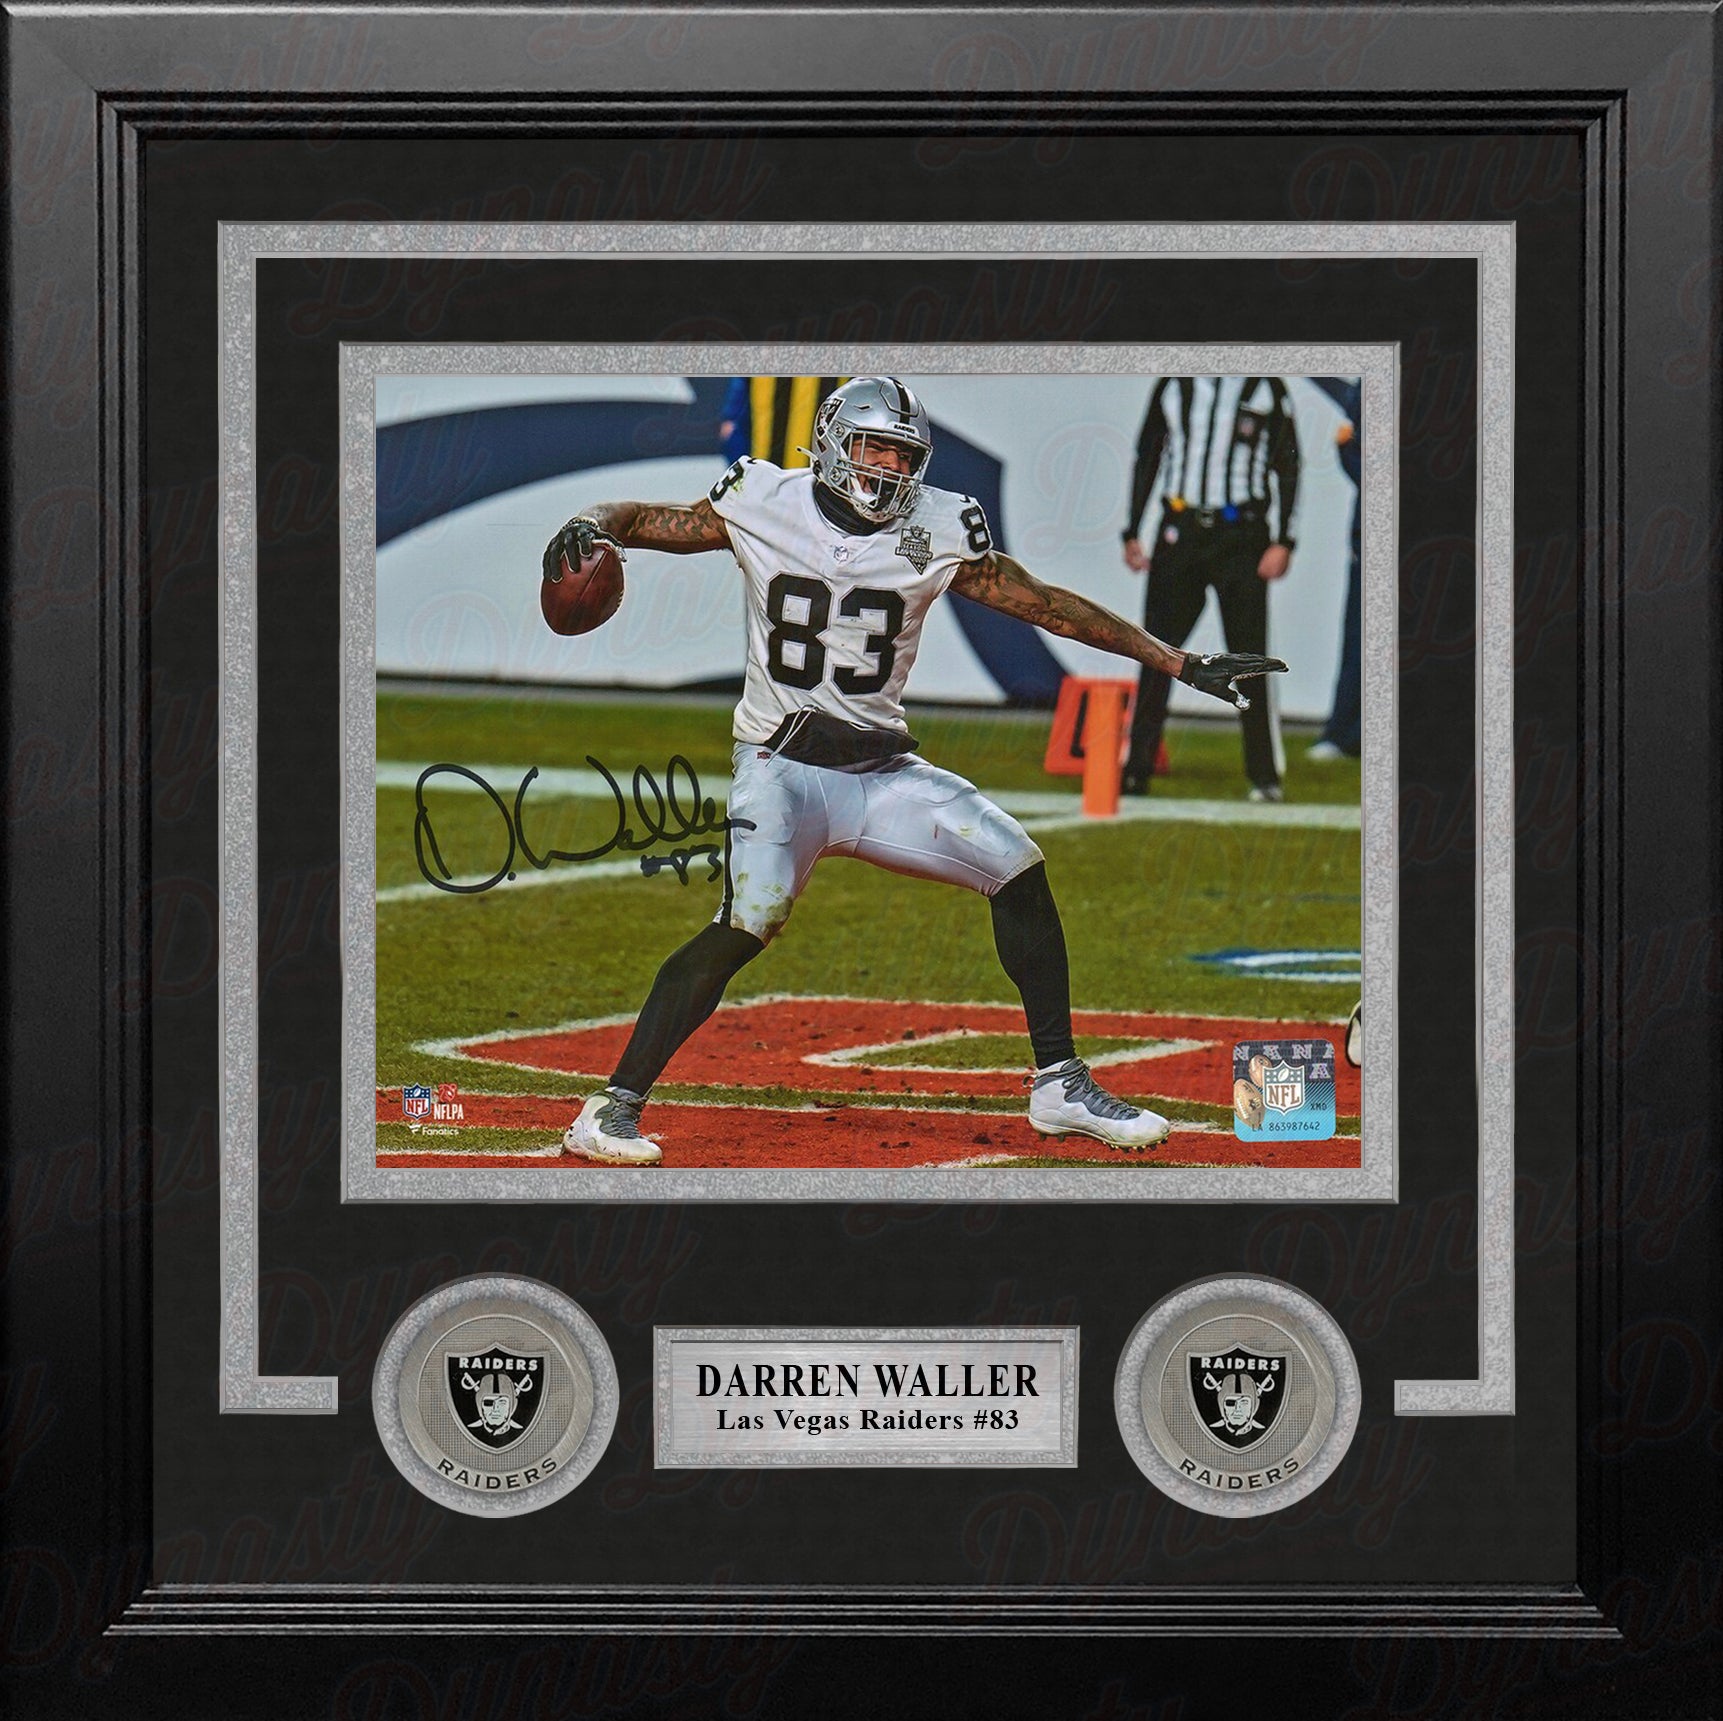 Darren Waller Touchdown Celebration Las Vegas Raiders Autographed 8" x 10" Framed Football Photo - Dynasty Sports & Framing 